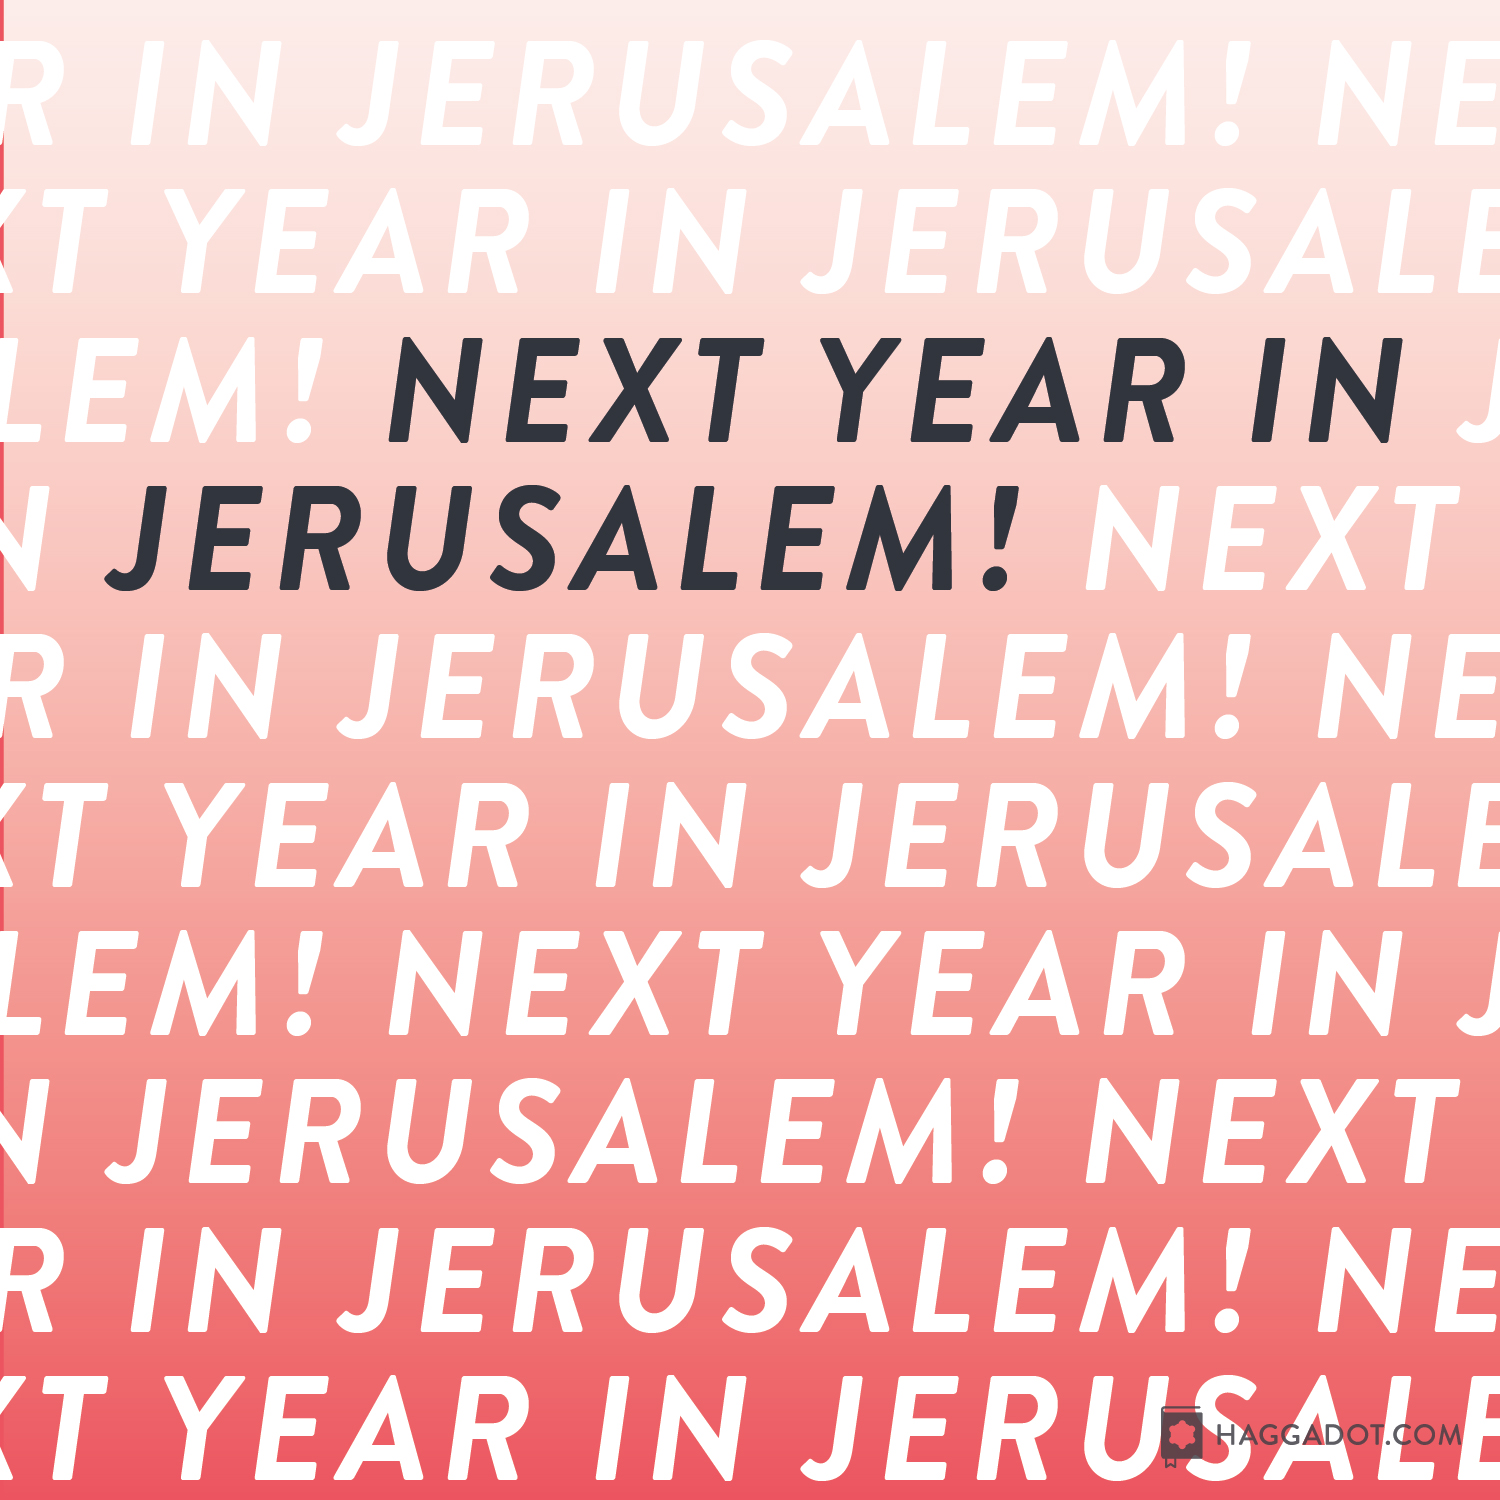 Next Year In Jerusalem!